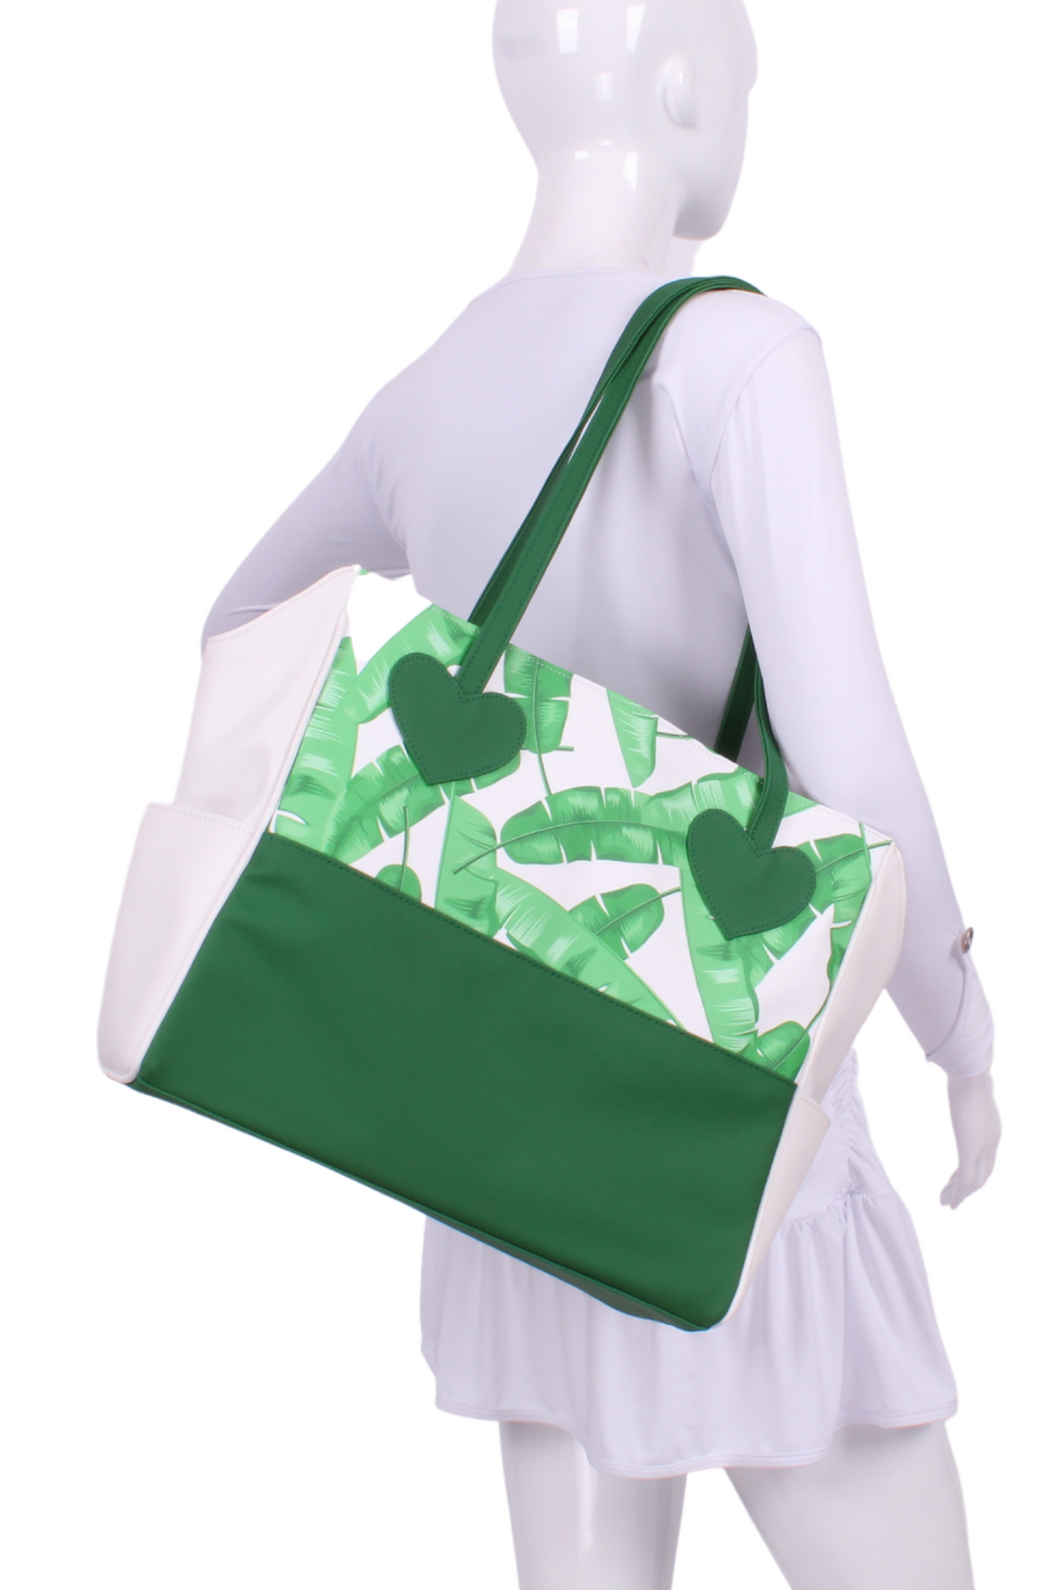 Banana Leaf on White + White Green Mini LOVE Tote Tennis Bag - I LOVE MY DOUBLES PARTNER!!!